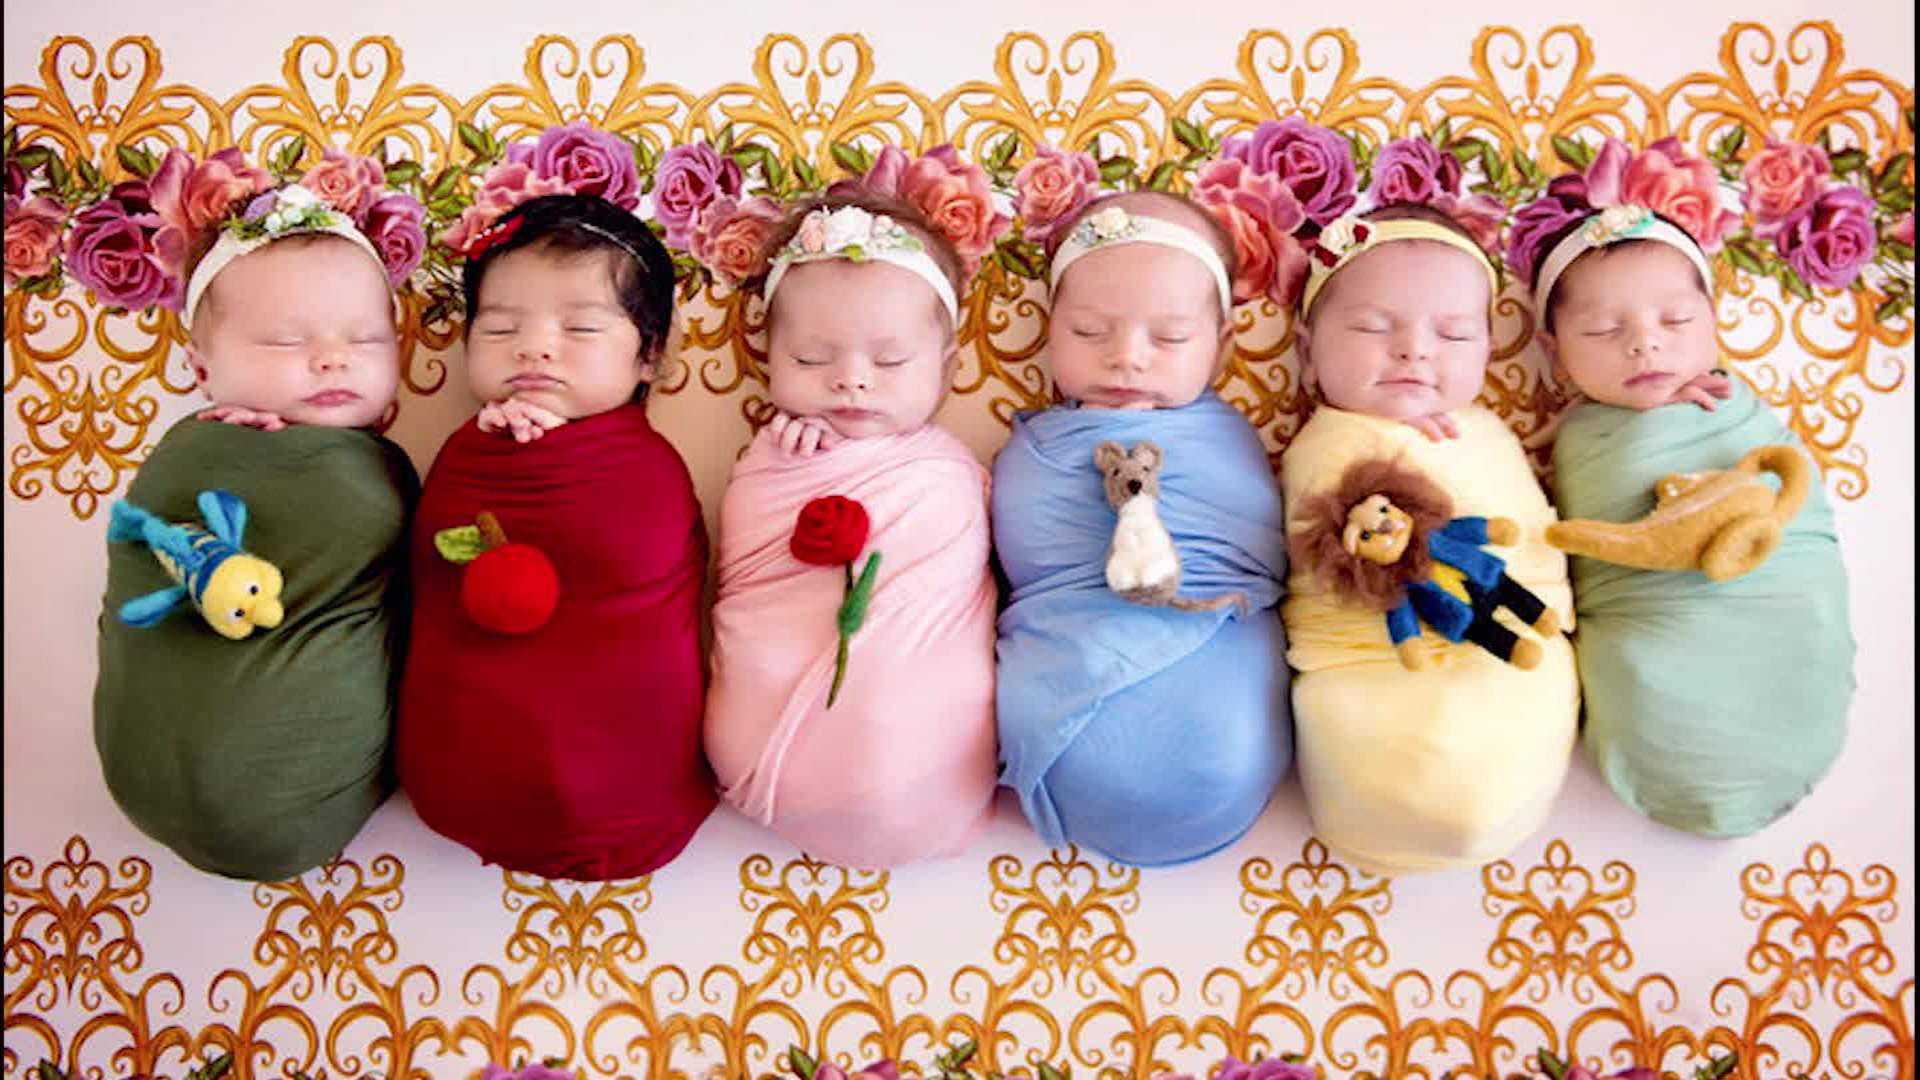 Tiny babies transformed to Disney princesses